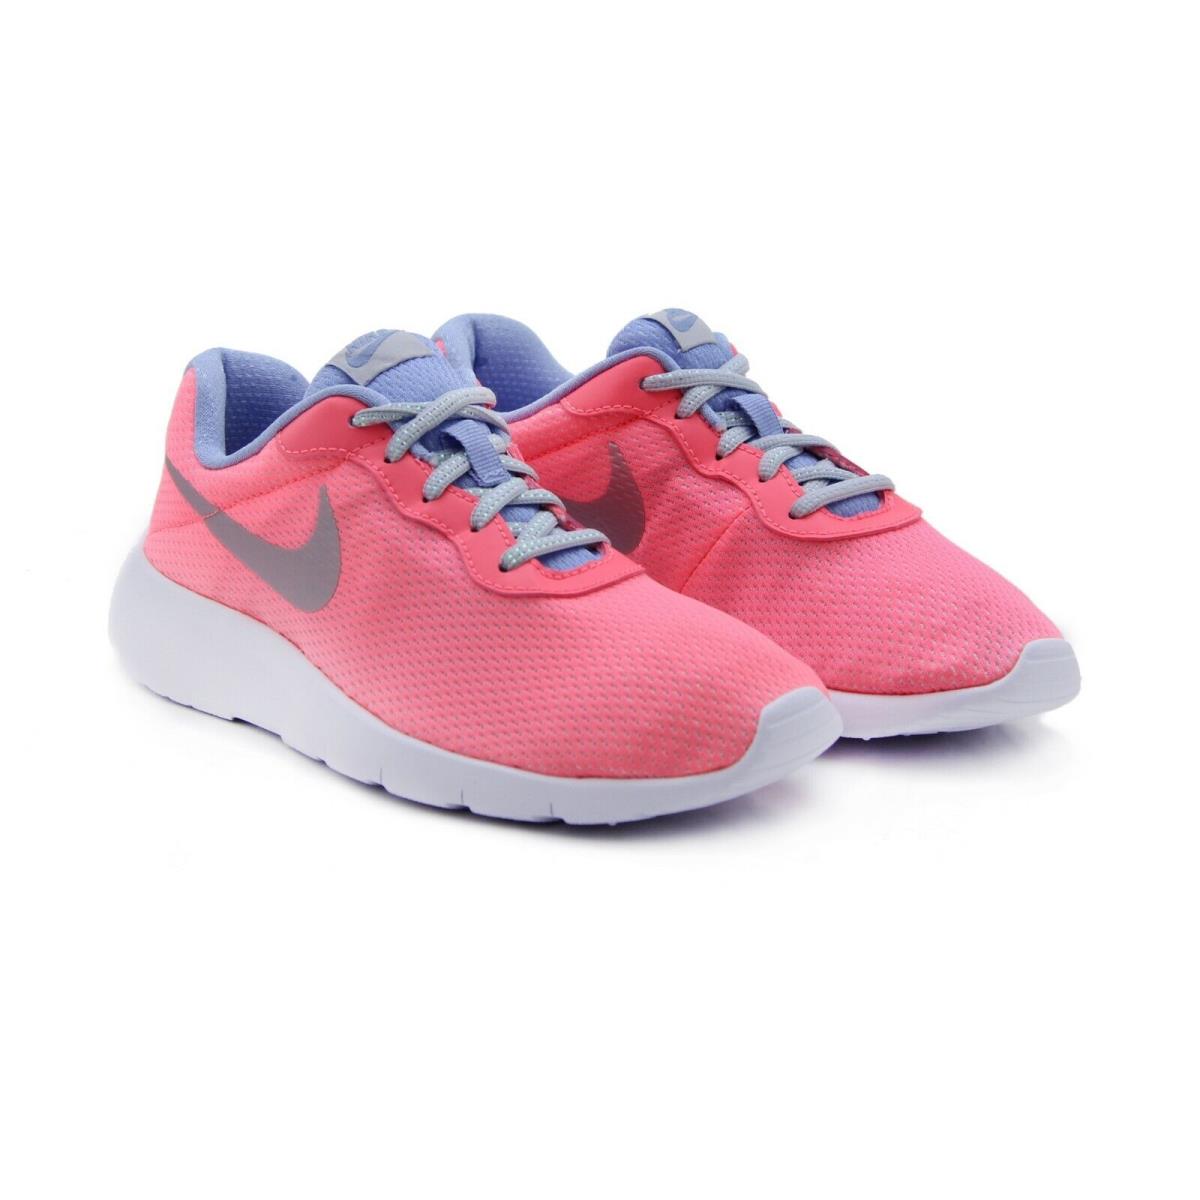 Nike Tanjun SE Running Shoes 859617-600 Big Kid`s GS Youth Size: 4.5